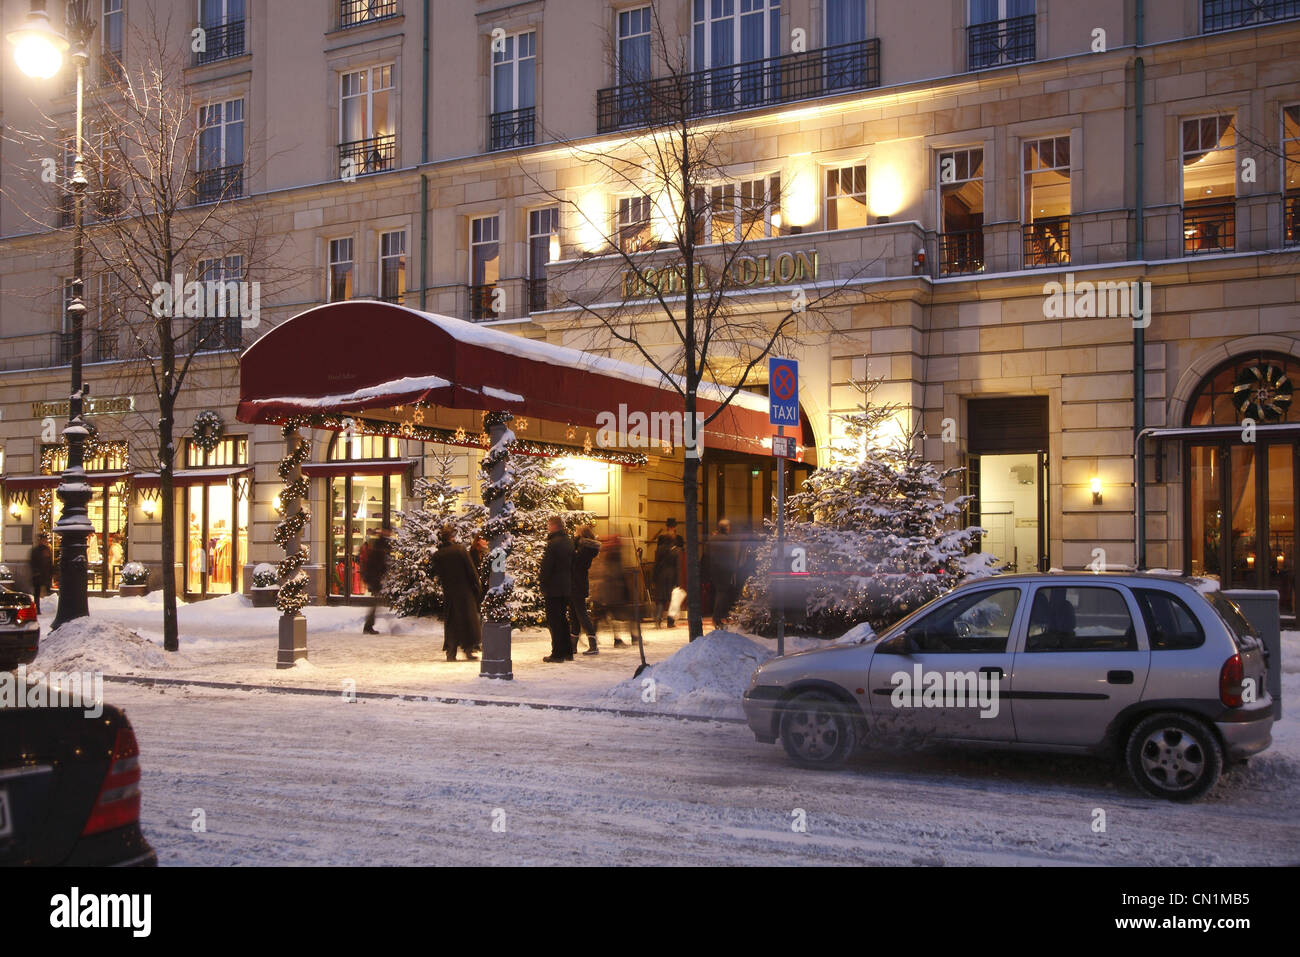 Berlin Hotel Adlon Winter Snow Christmas Entrance Stock Photo